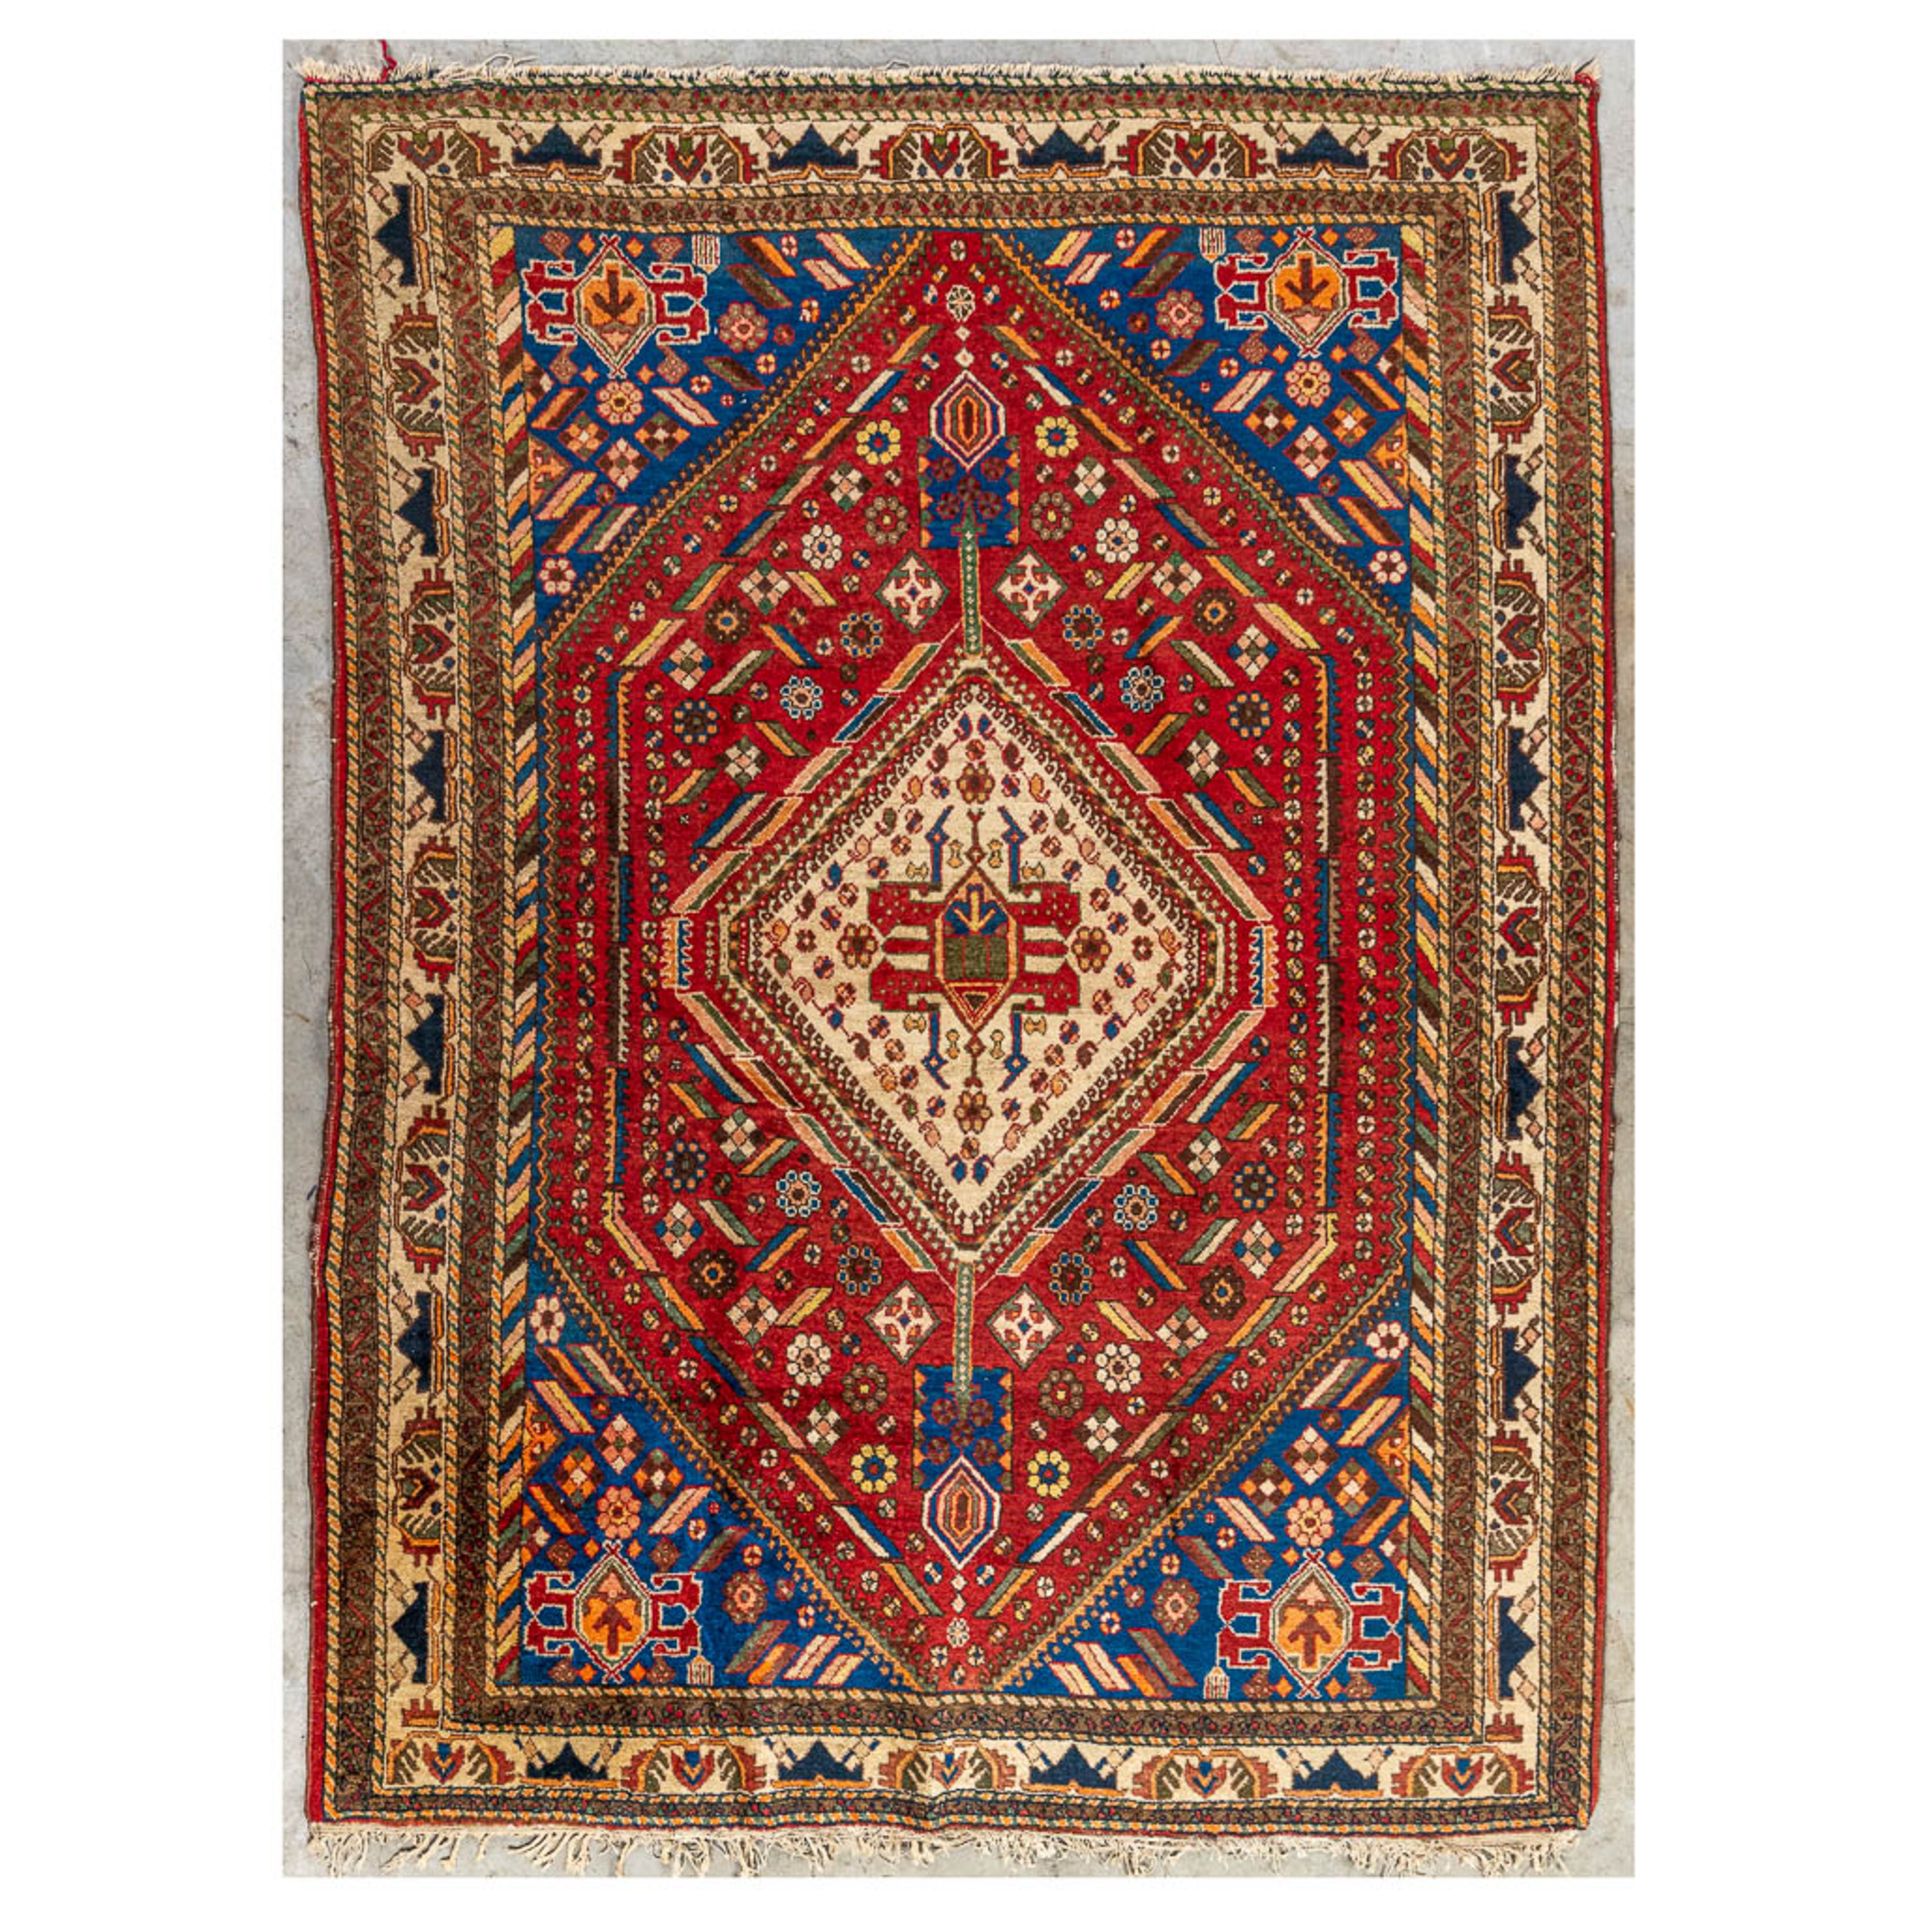 An Oriental hand-made carpet. Klardasht. (205 x 152 cm)